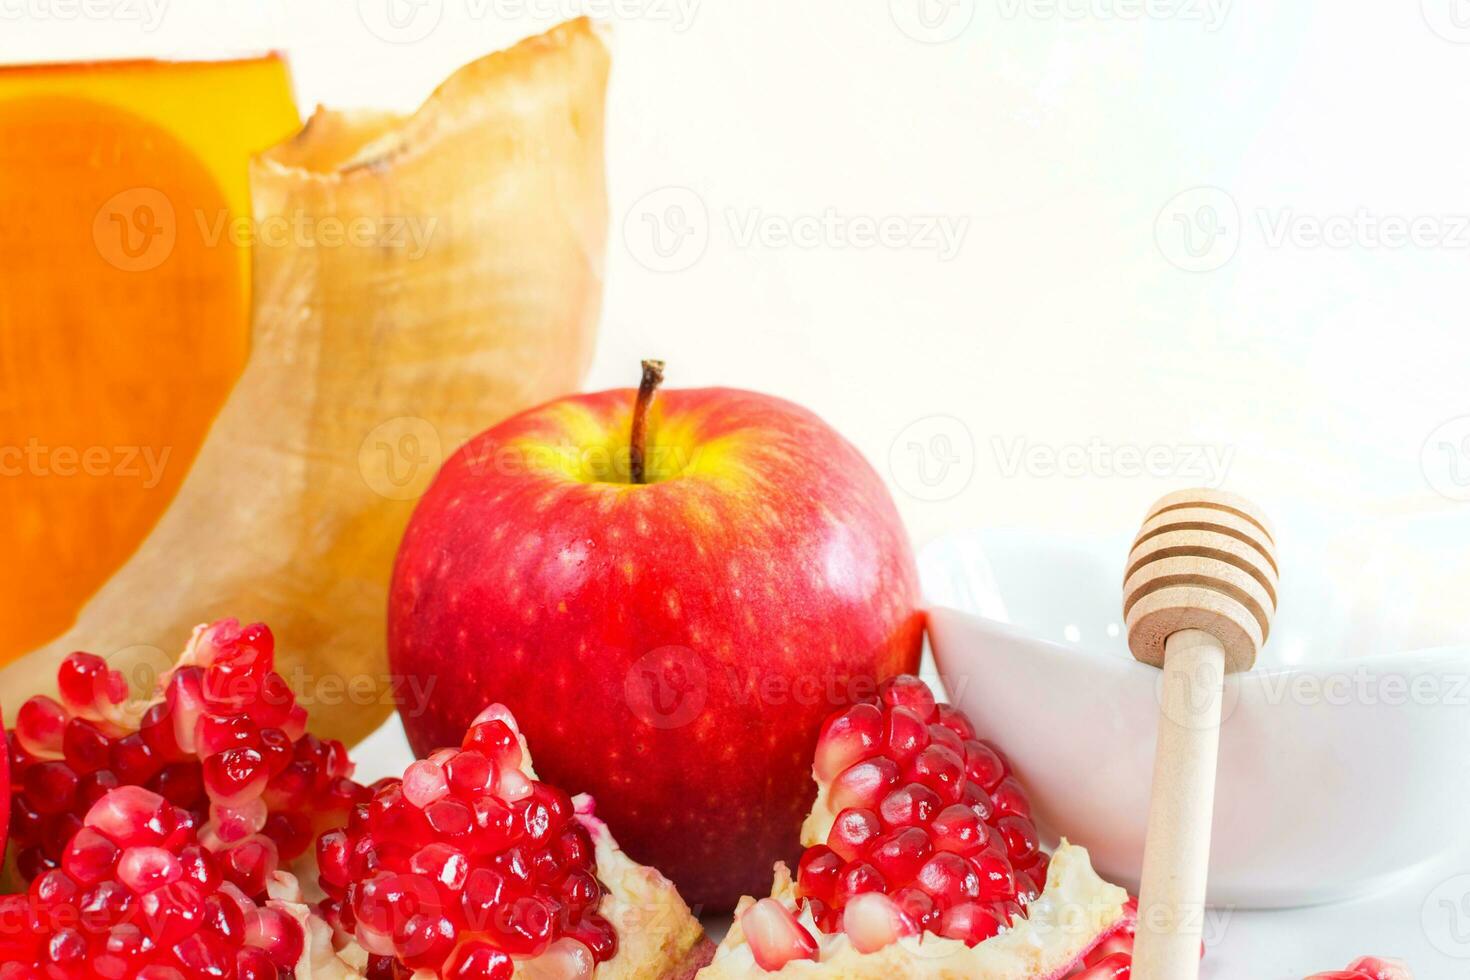 Whole pomegranate, pomegranate seeds, red apple and honey, on white background. Jewish New Year symbols. photo